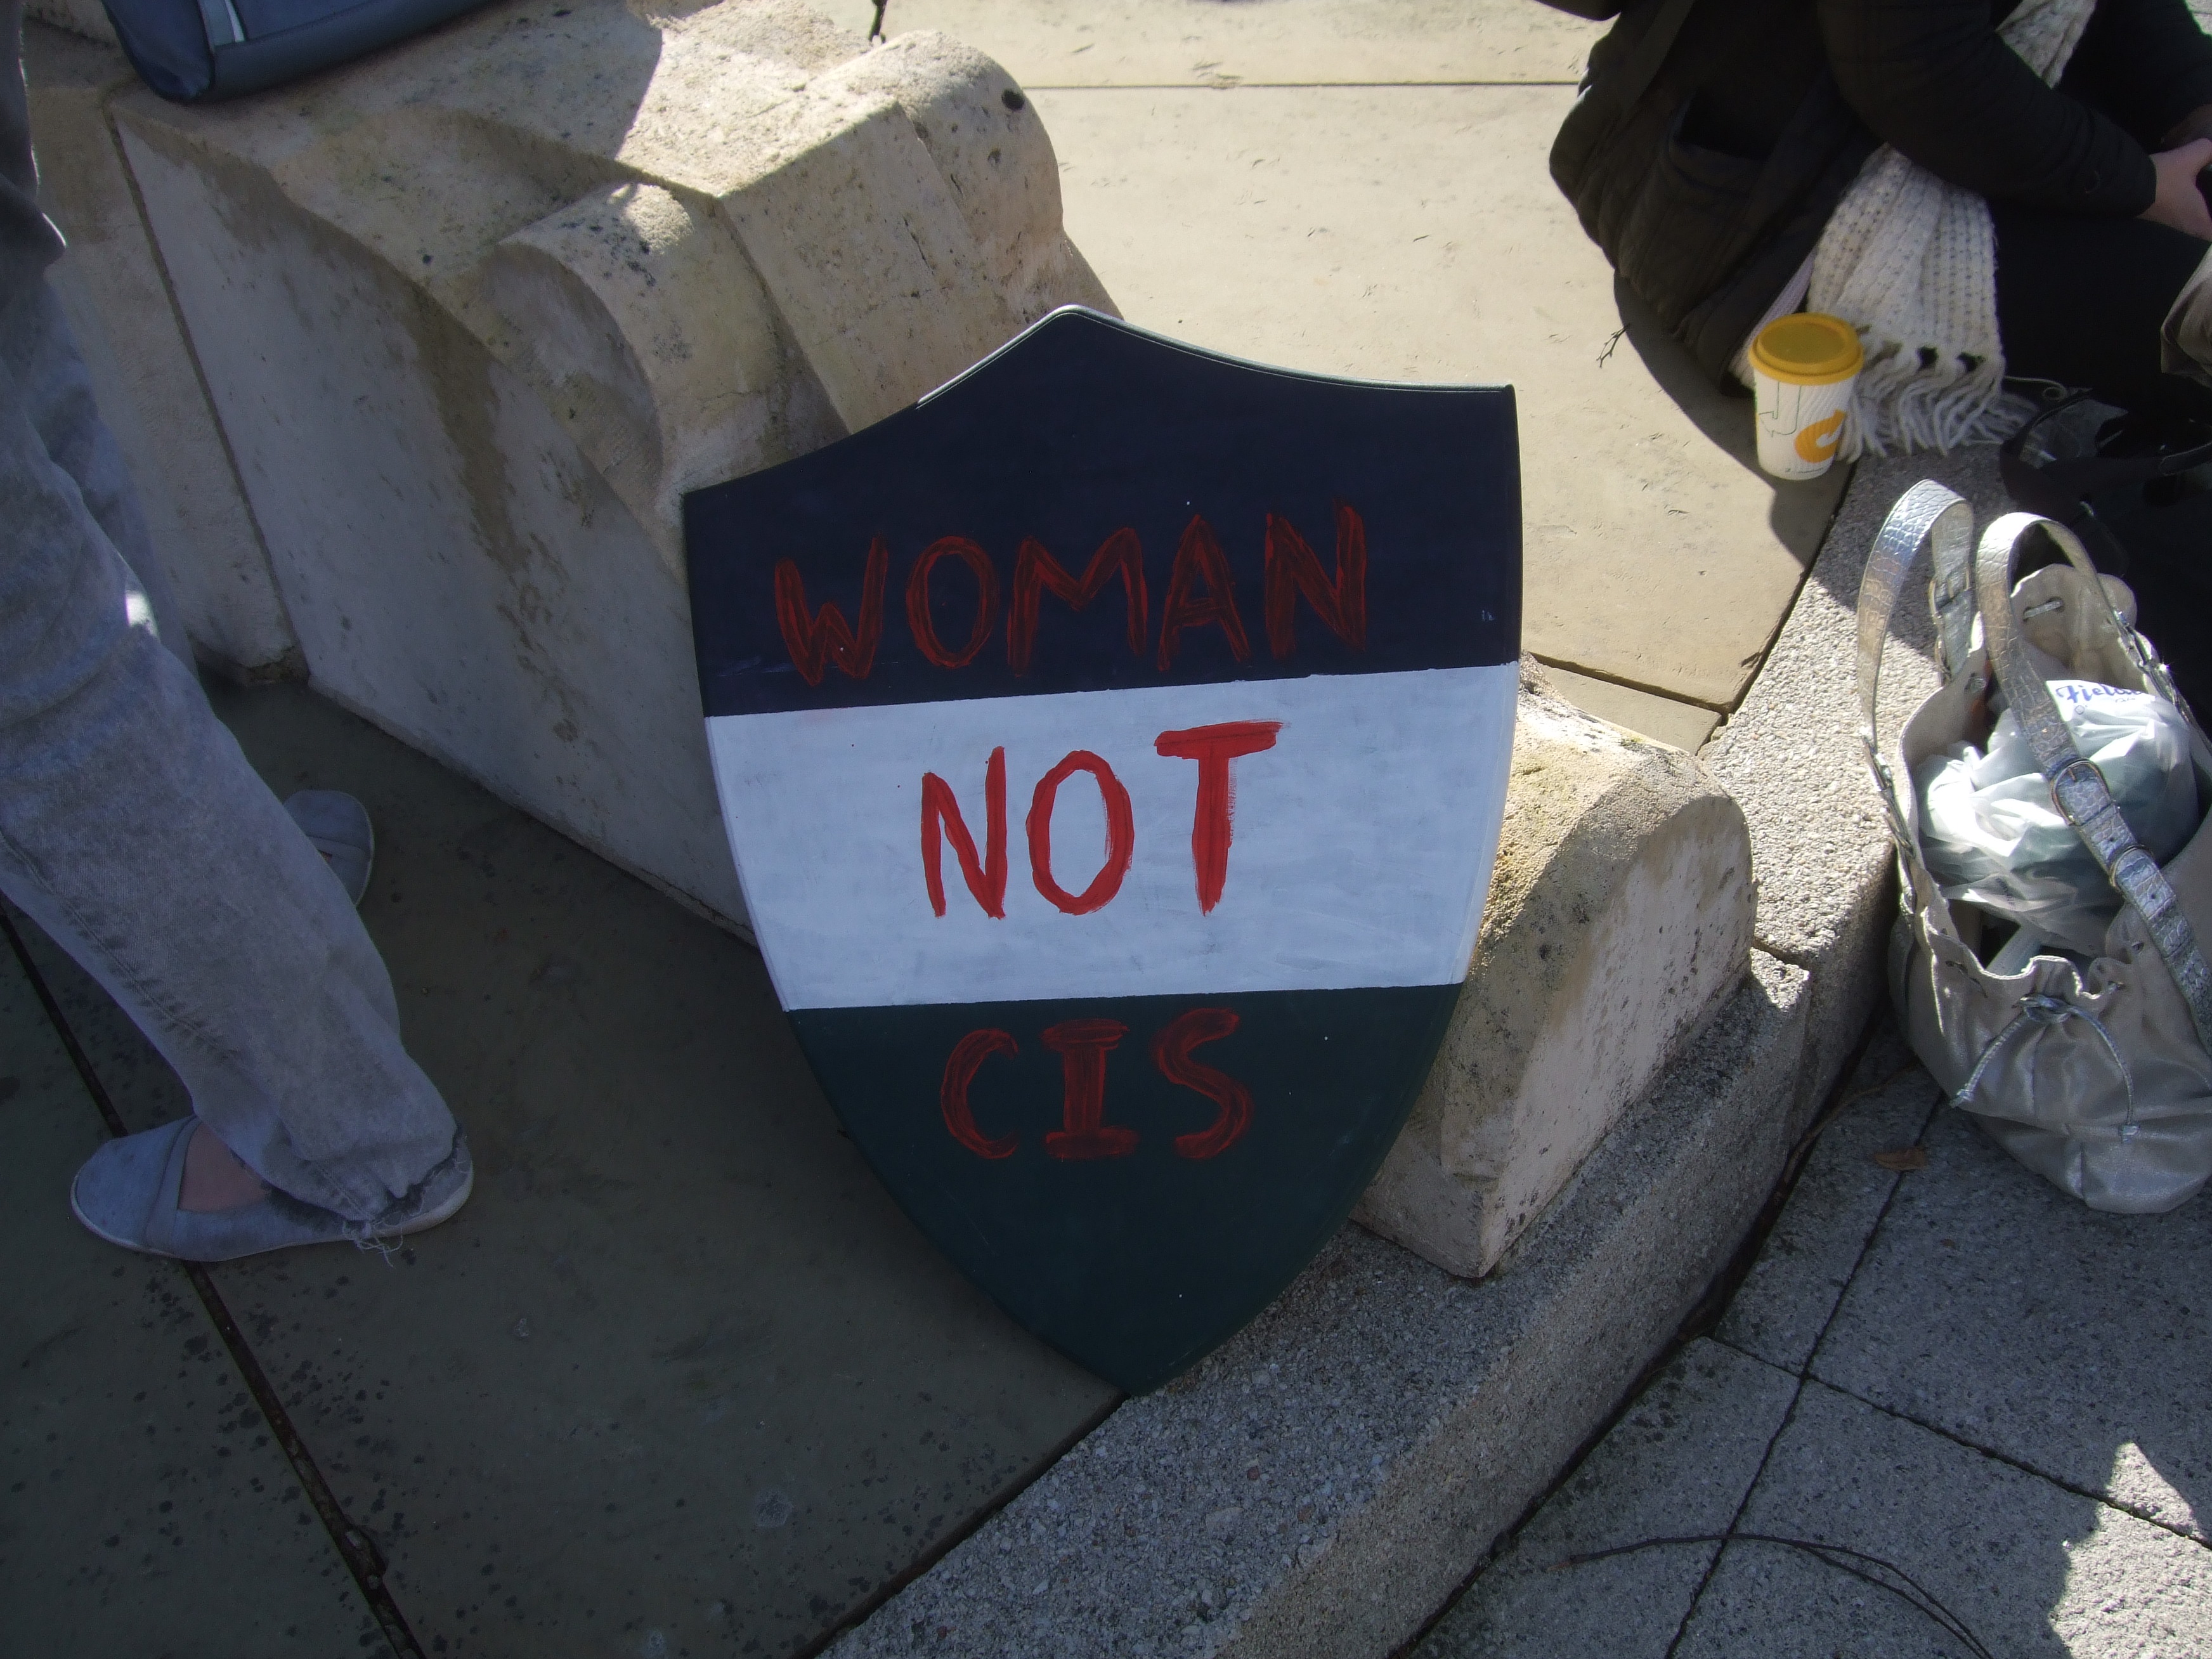 Newport banners: woman NOT CIS